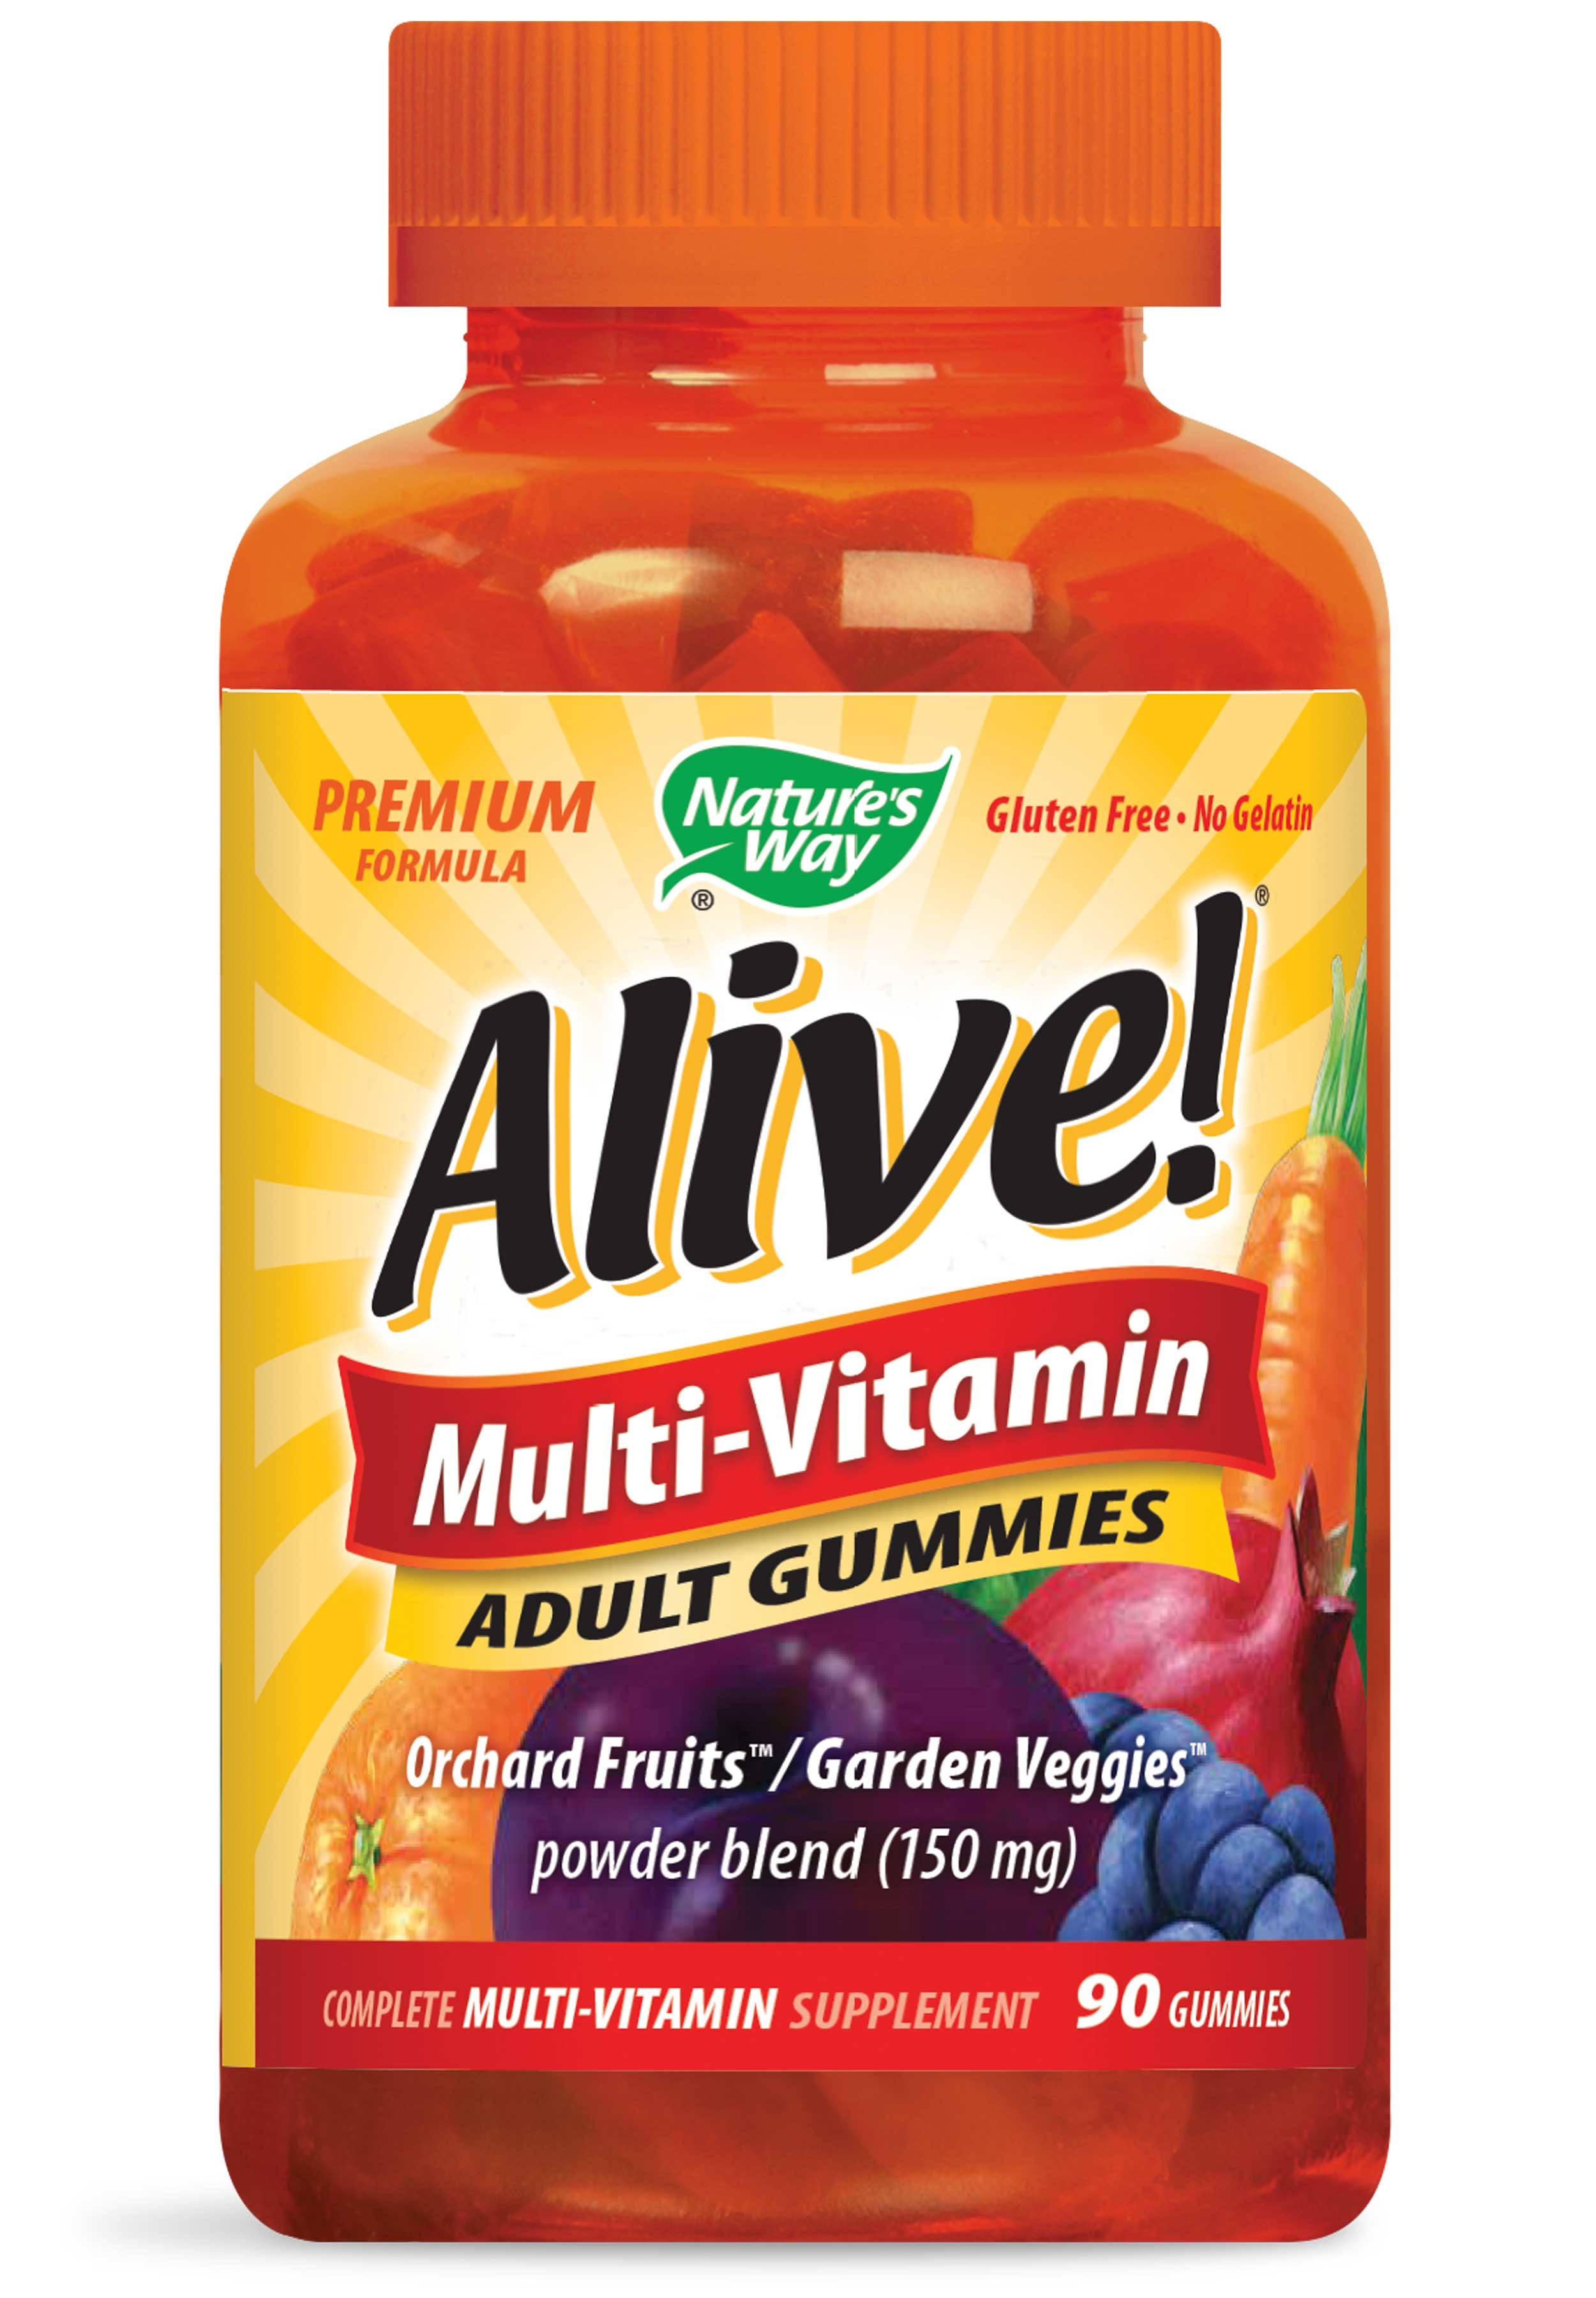 Nature's Way Alive! Adult Multi-Vitamin Gummies